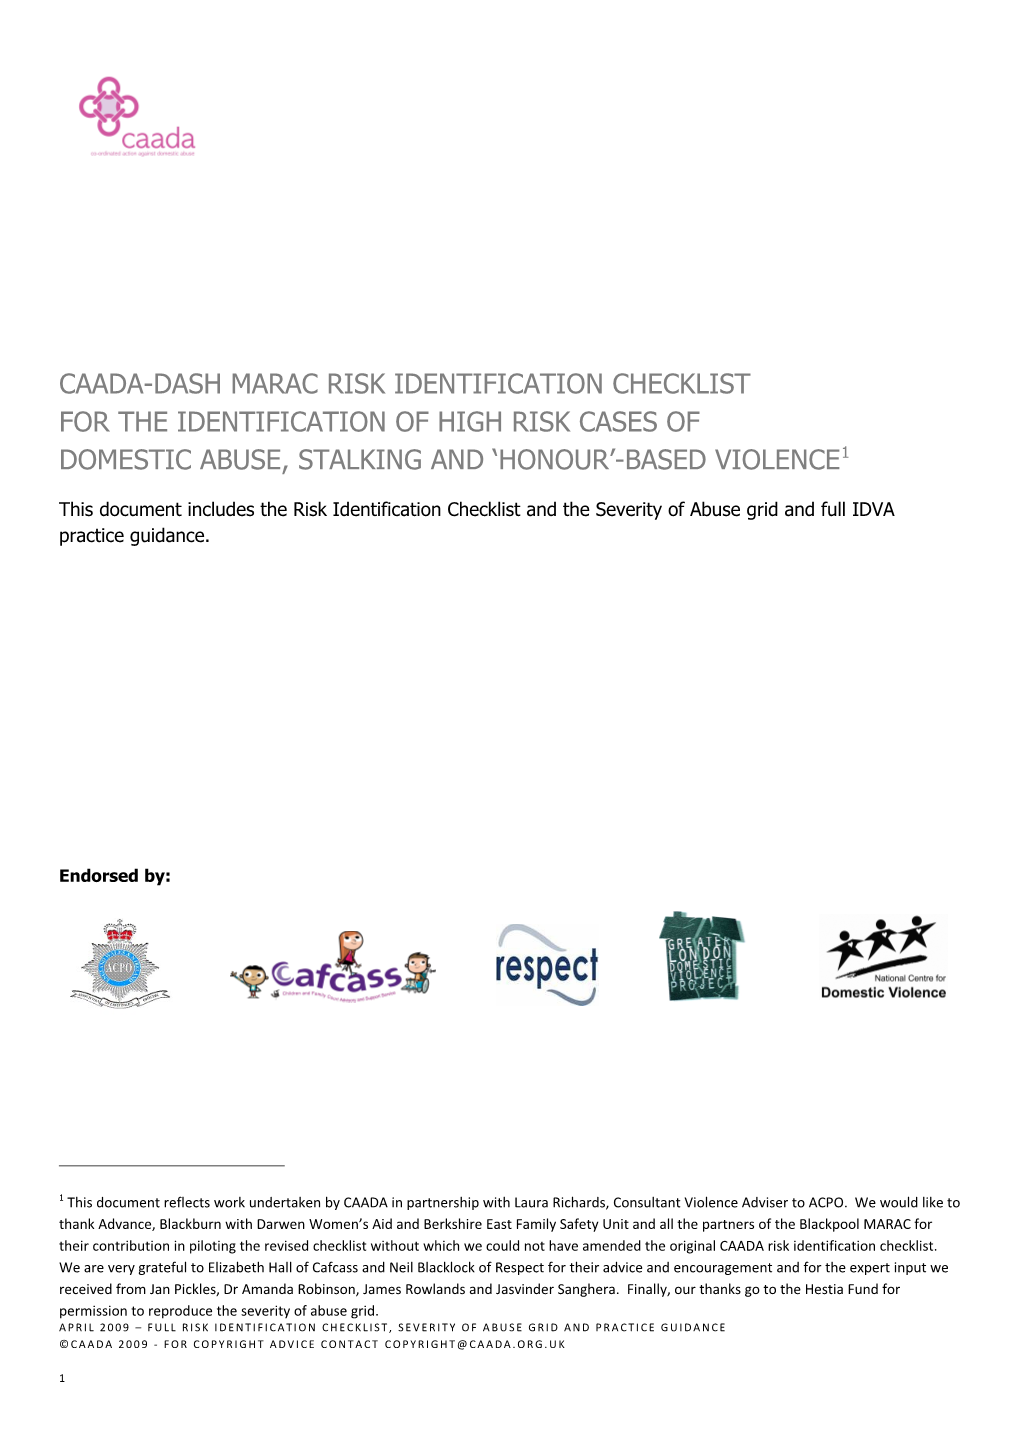 CAADA-DASH Risk Identification Checklist (RIC) for MARAC Agencies